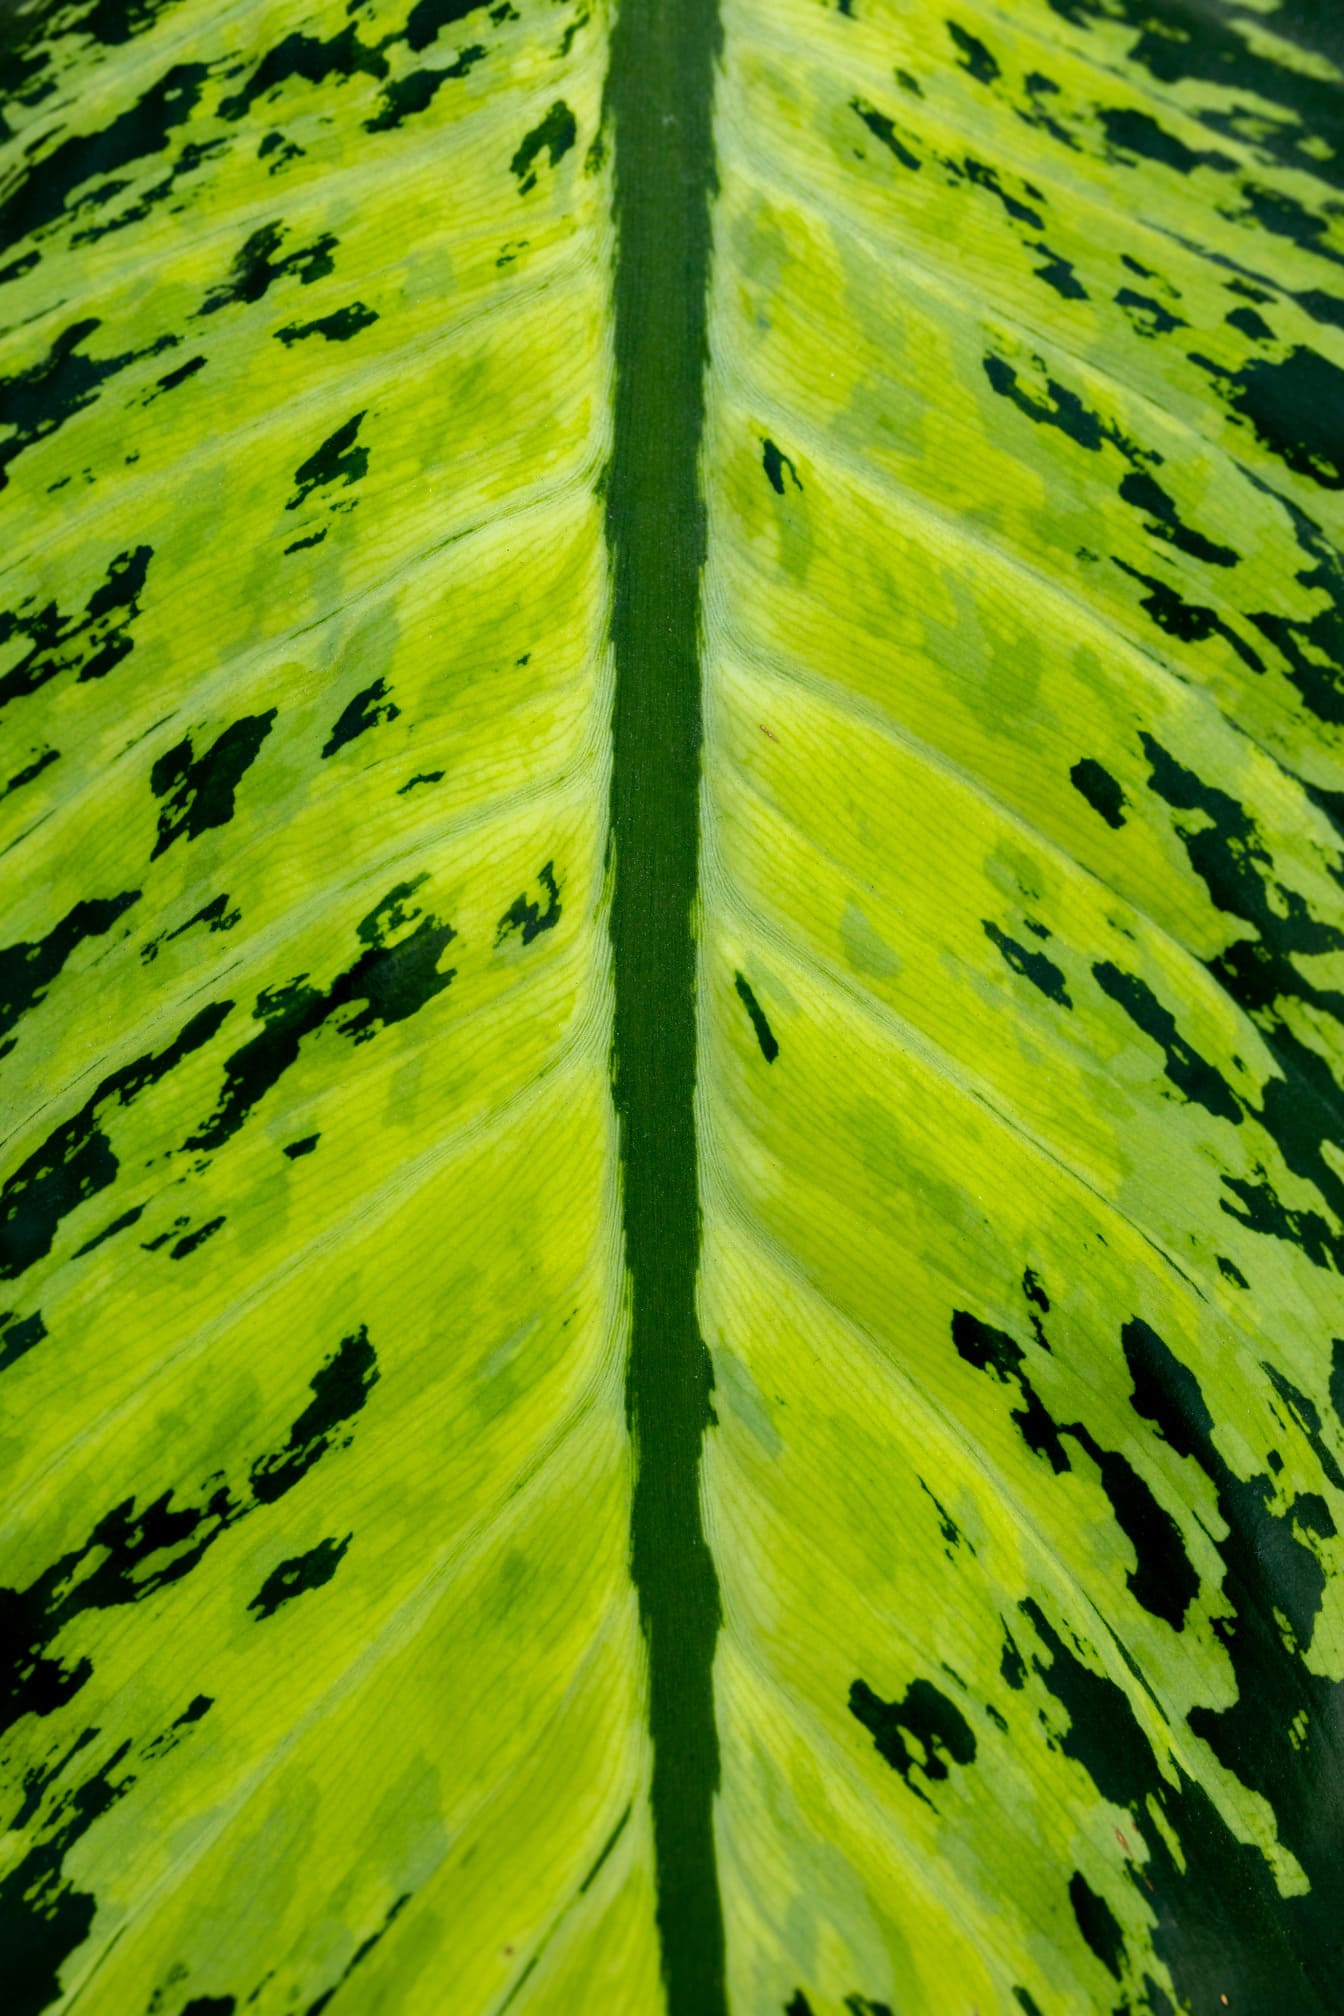 Dummer Stock (Dieffenbachia) gelblich-grünes Blatt Nahaufnahme